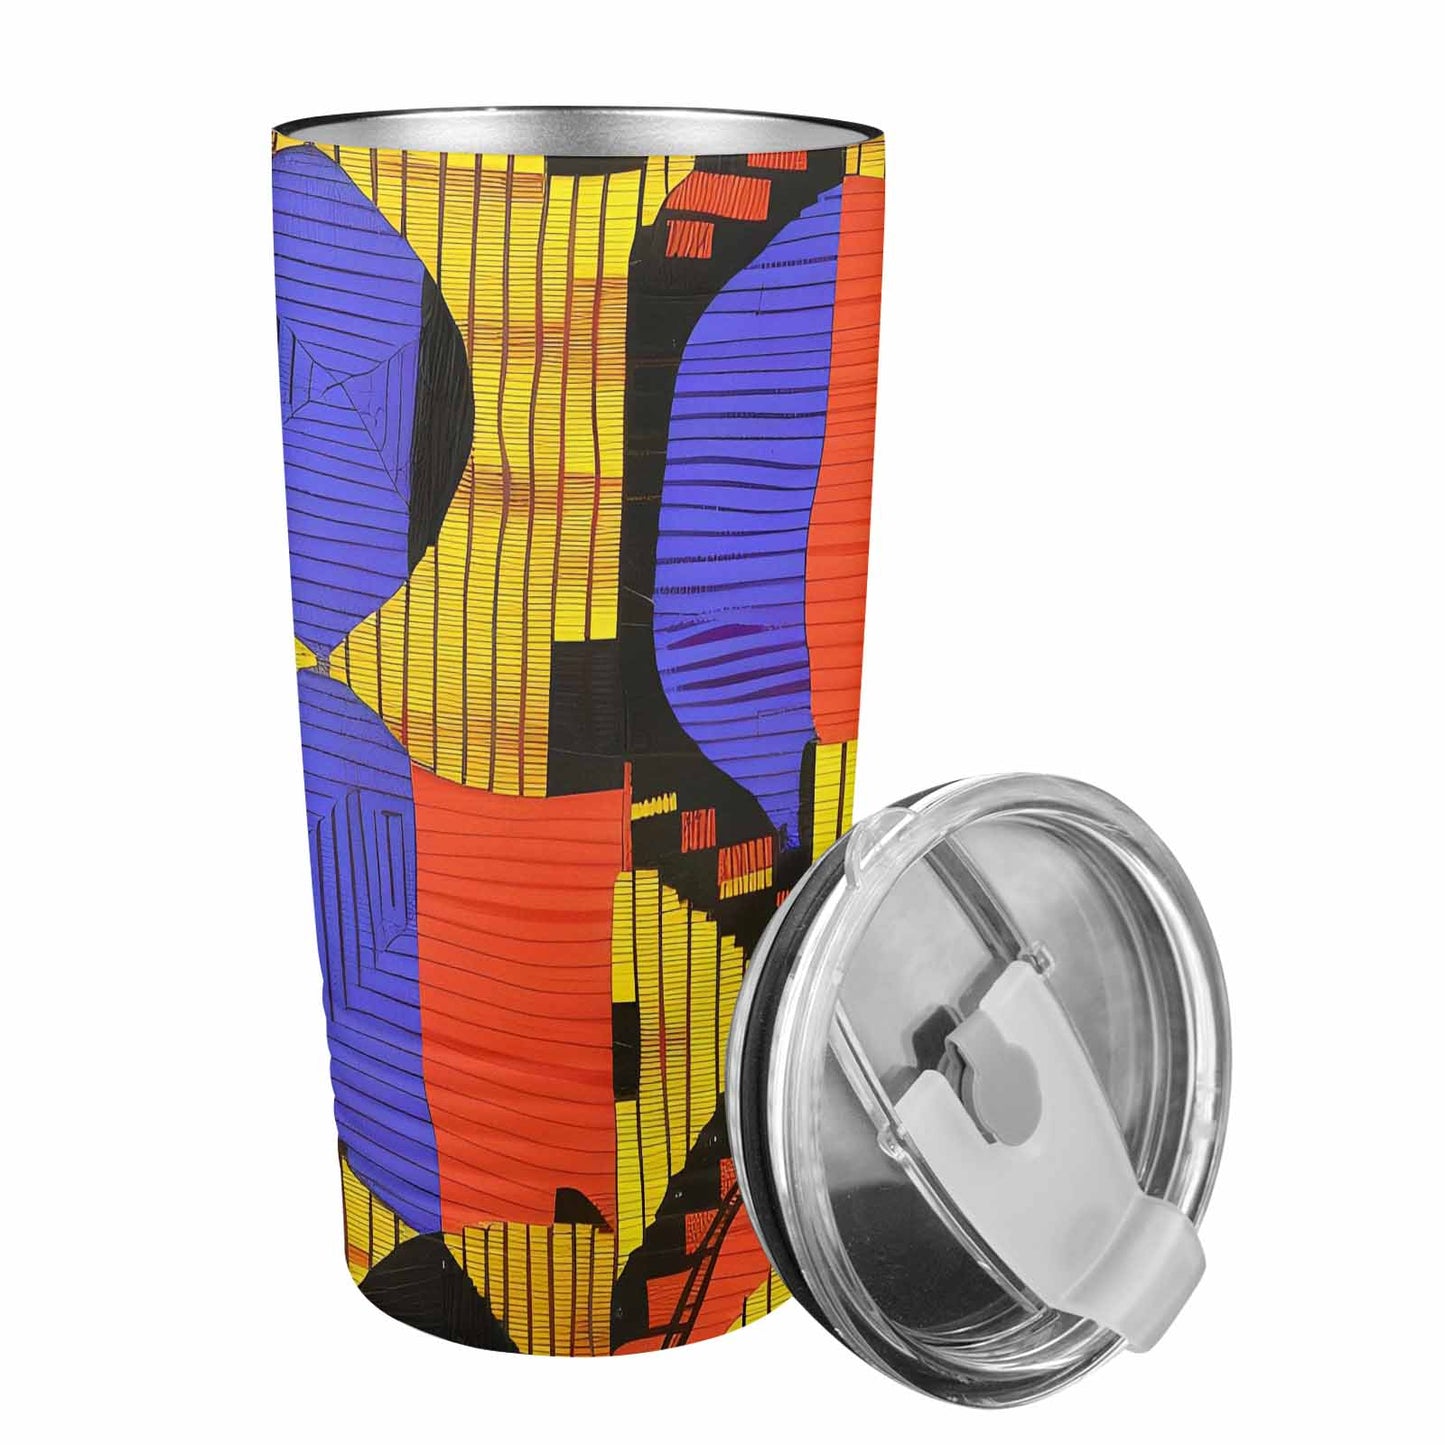 African Art, stainless steel insulated tumbler, travel mug, design 37